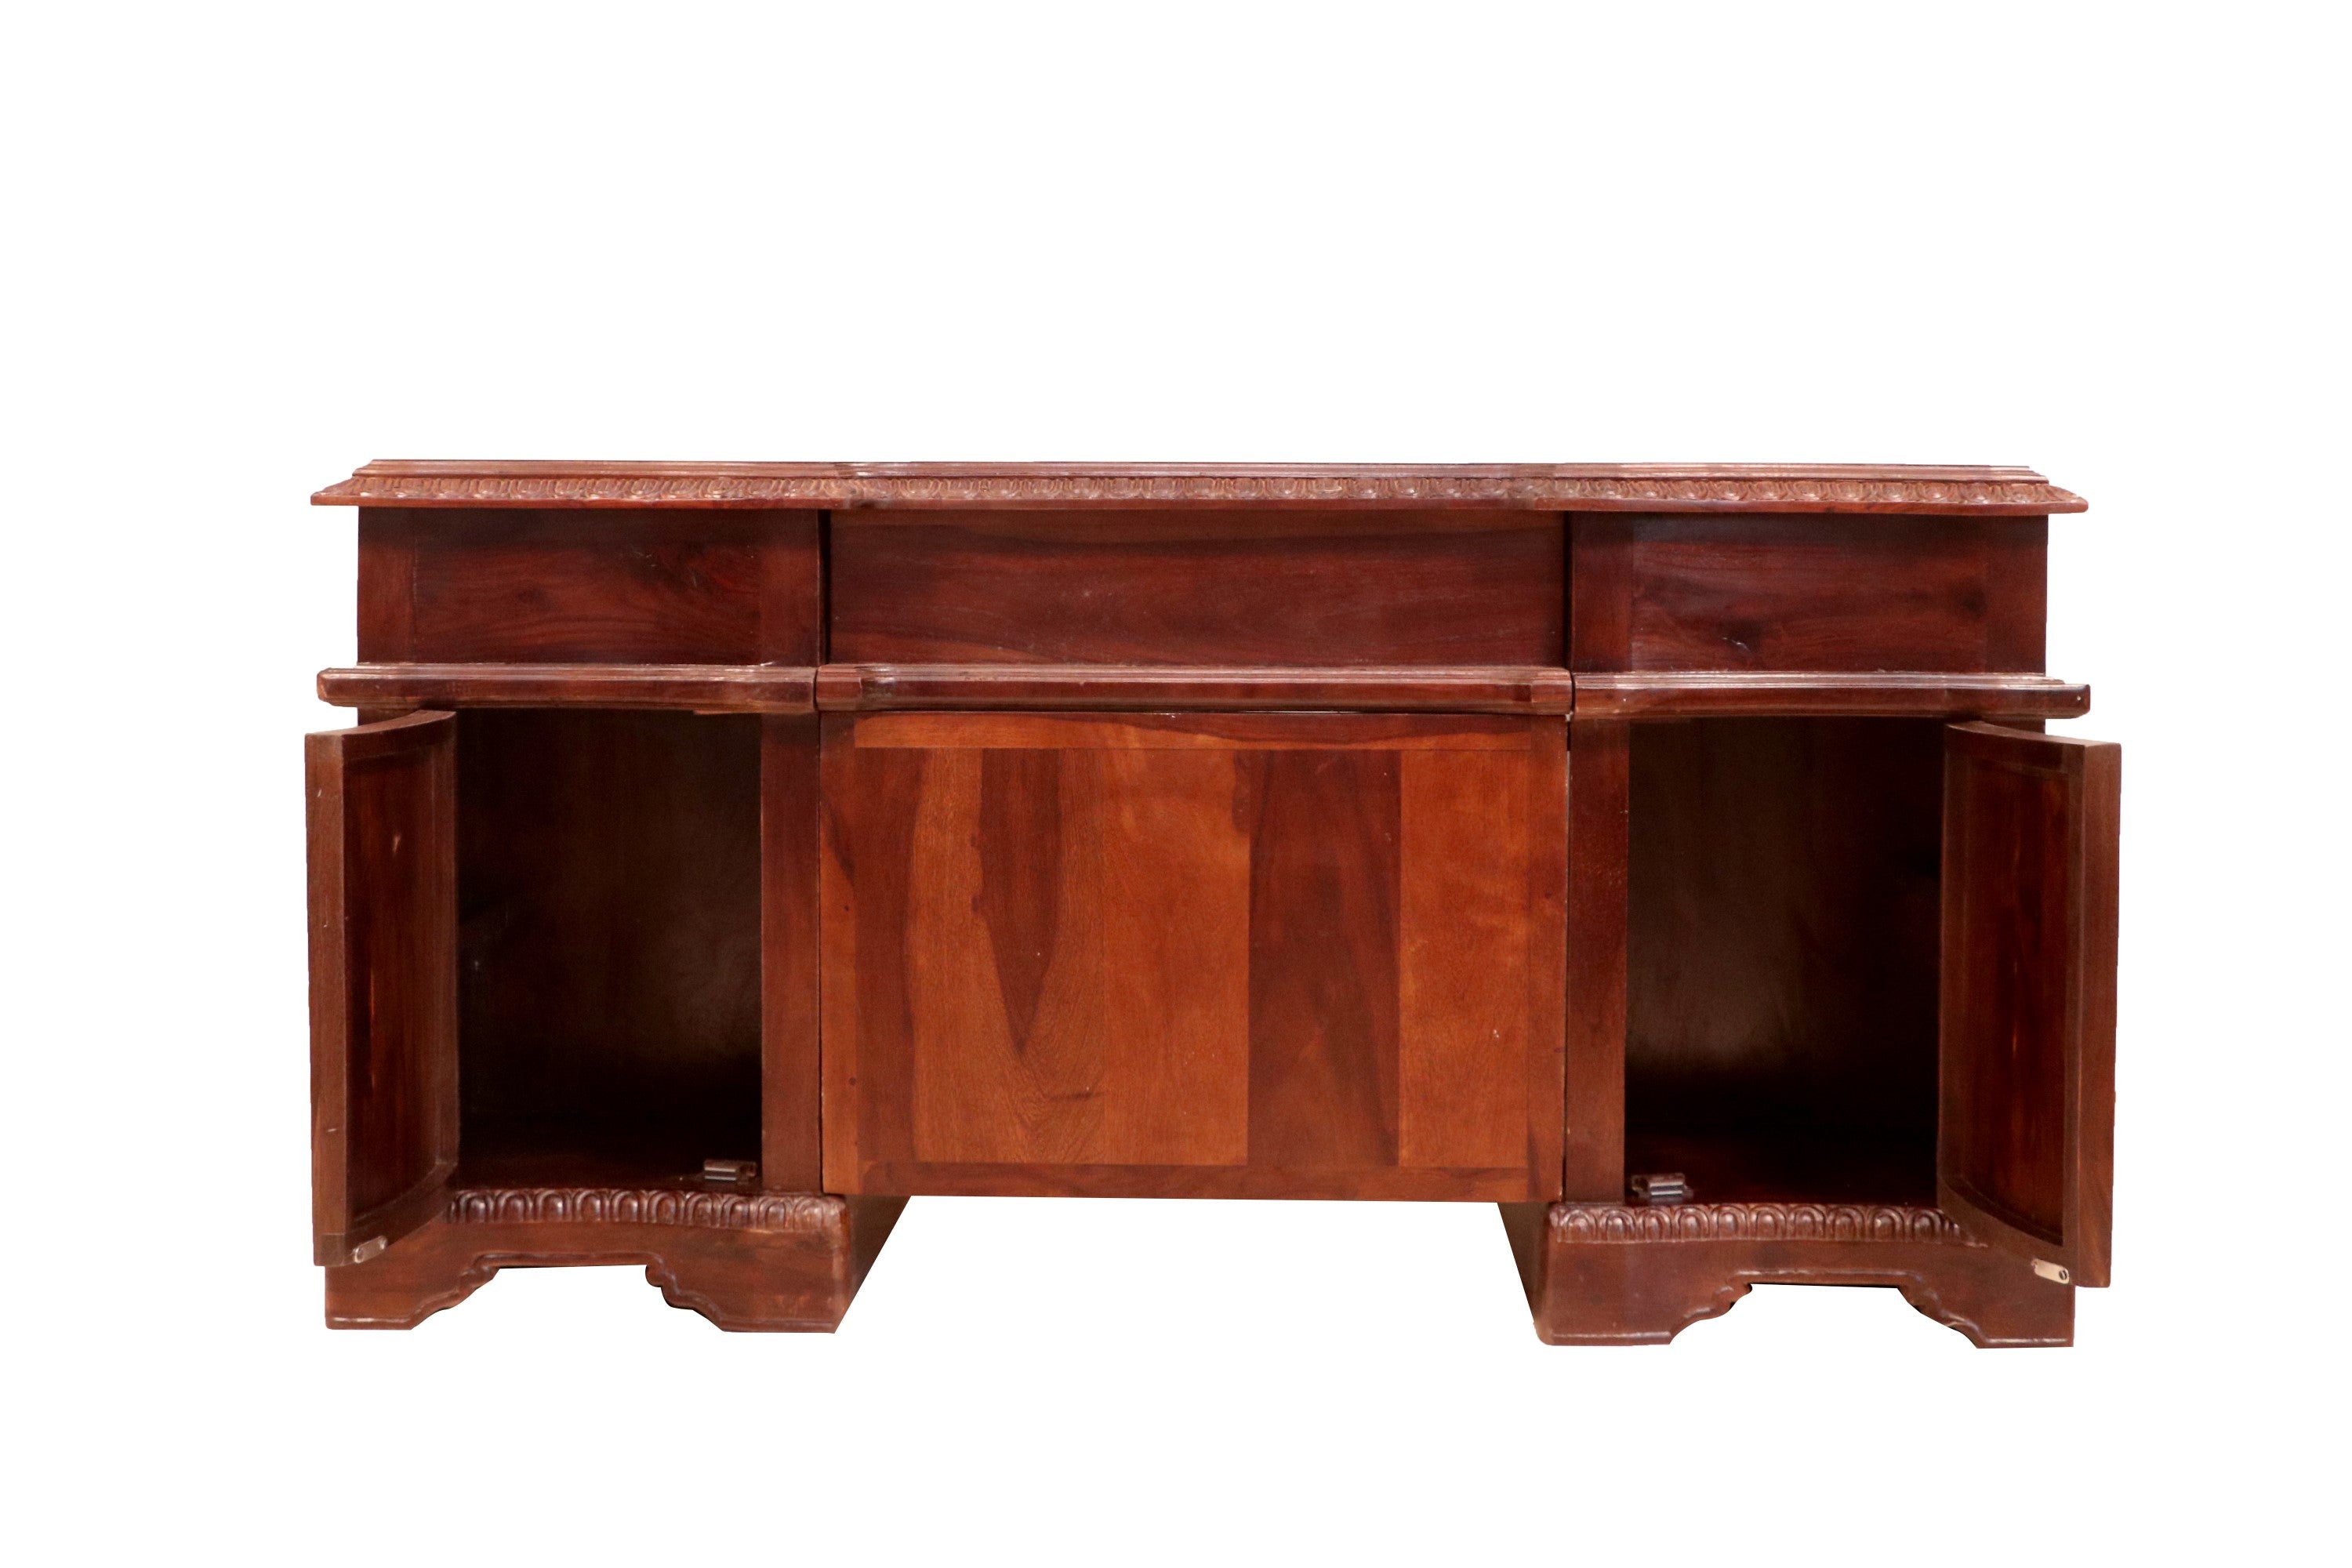 Teak polished Sturdy Wooden Royal Office Desk Study Table